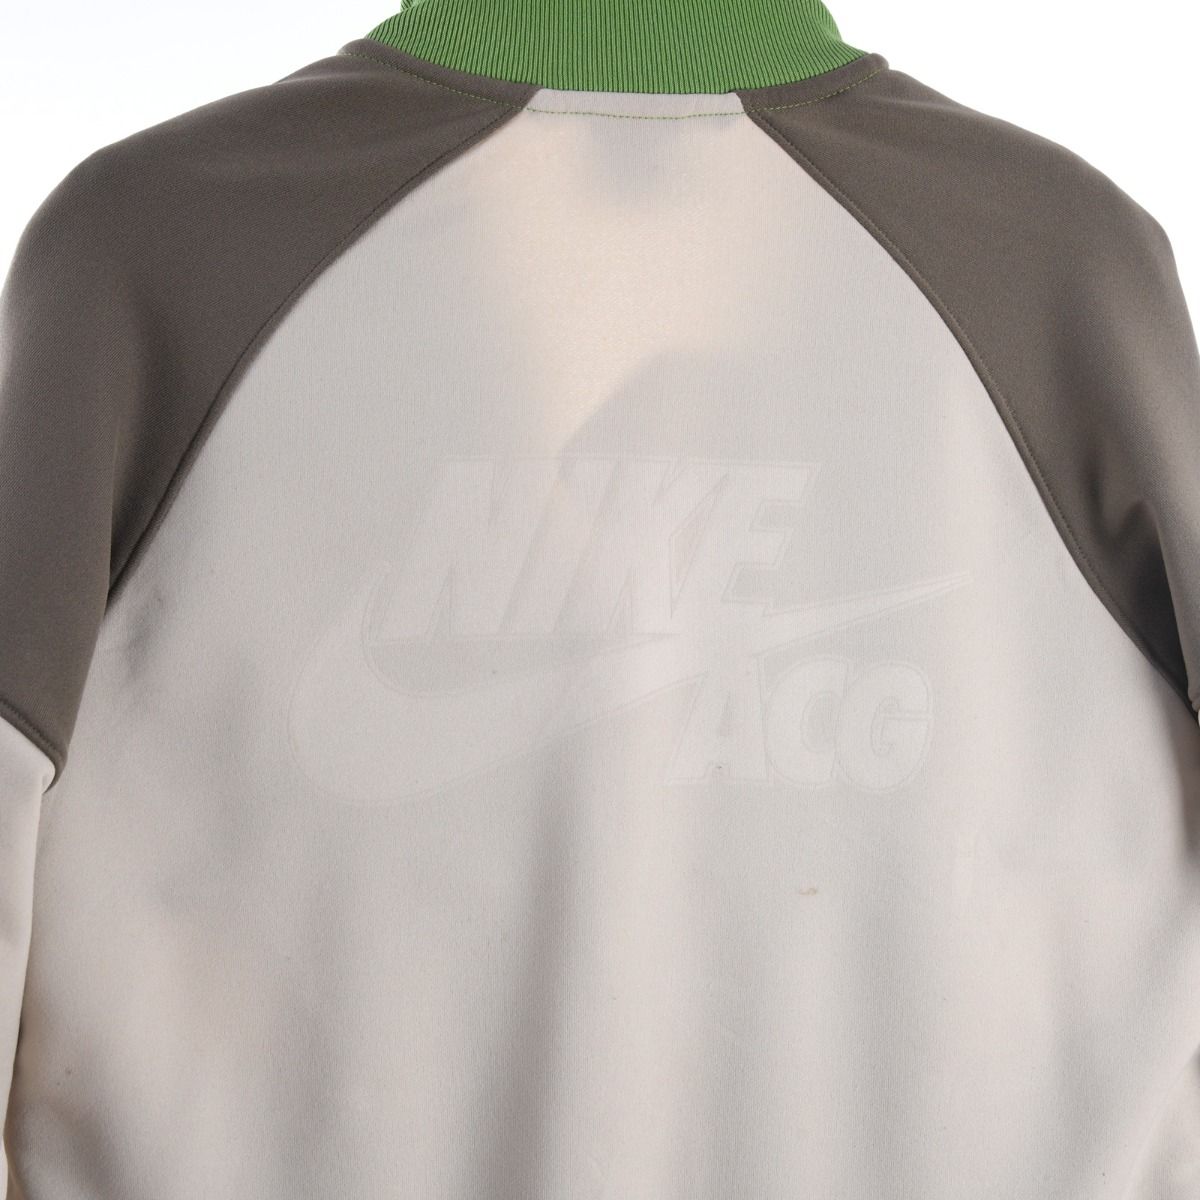 Nike ACG Early 2000s Track Jacket